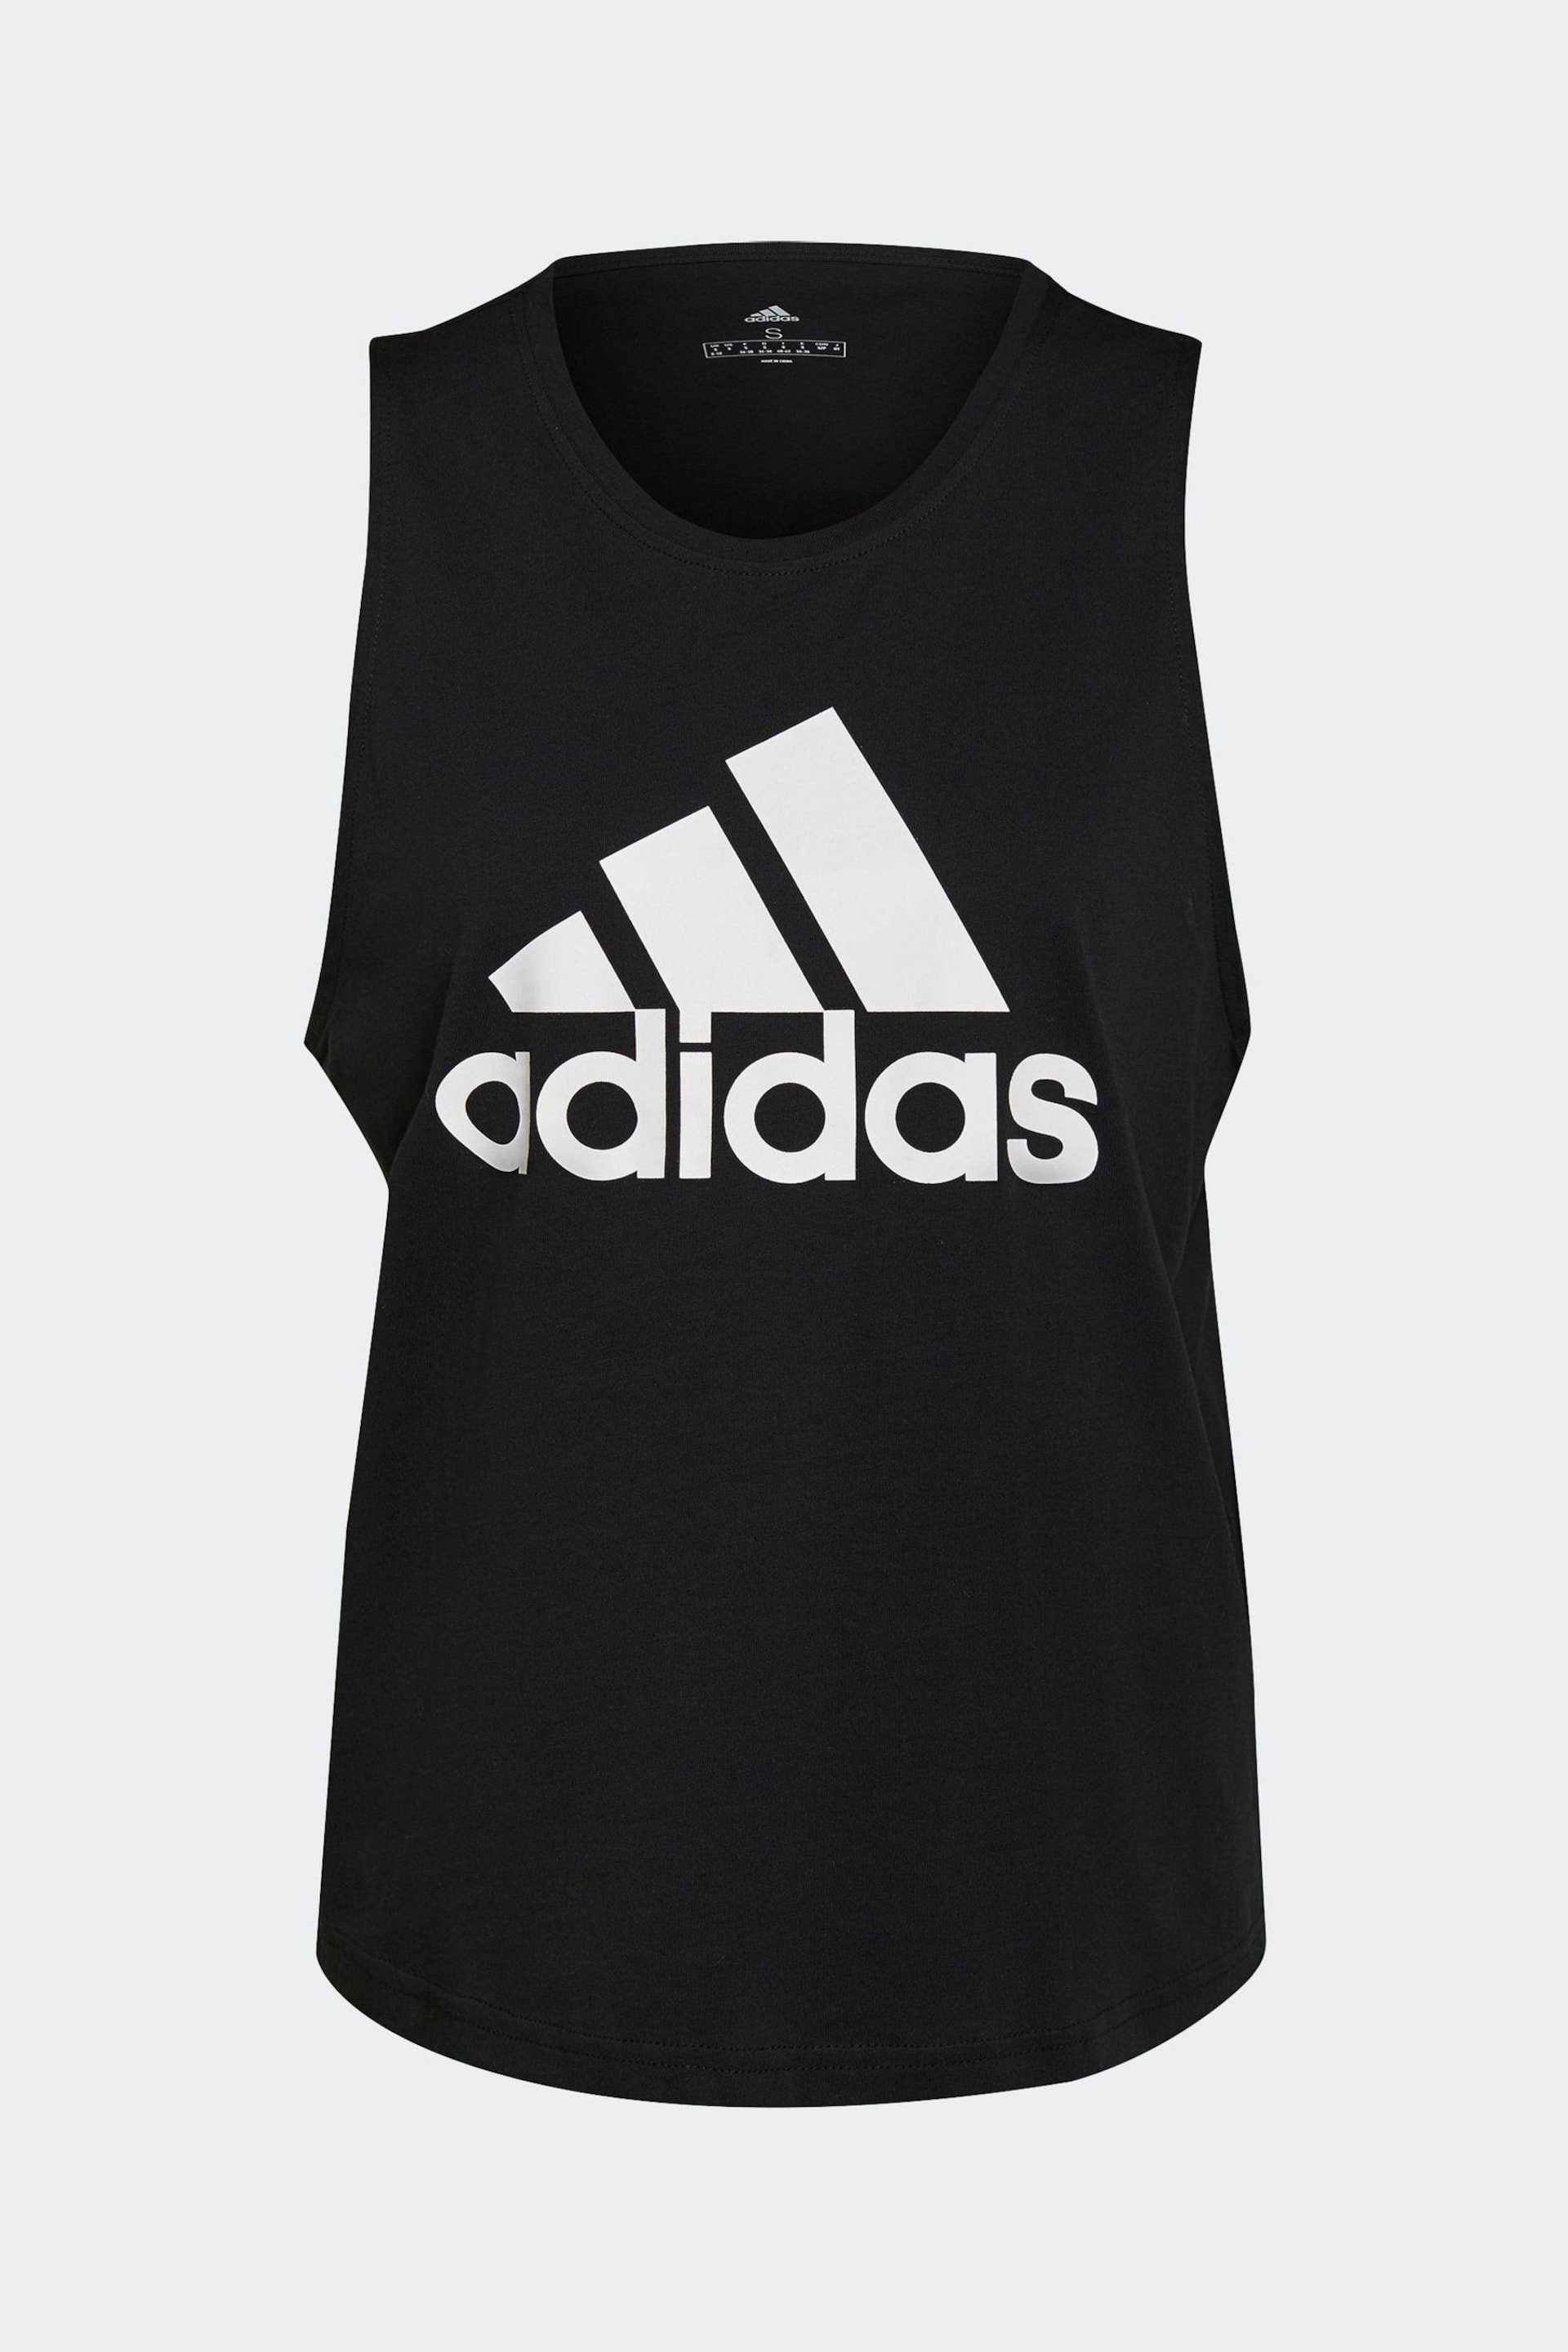 adidas Black Vest - Image 1 of 1